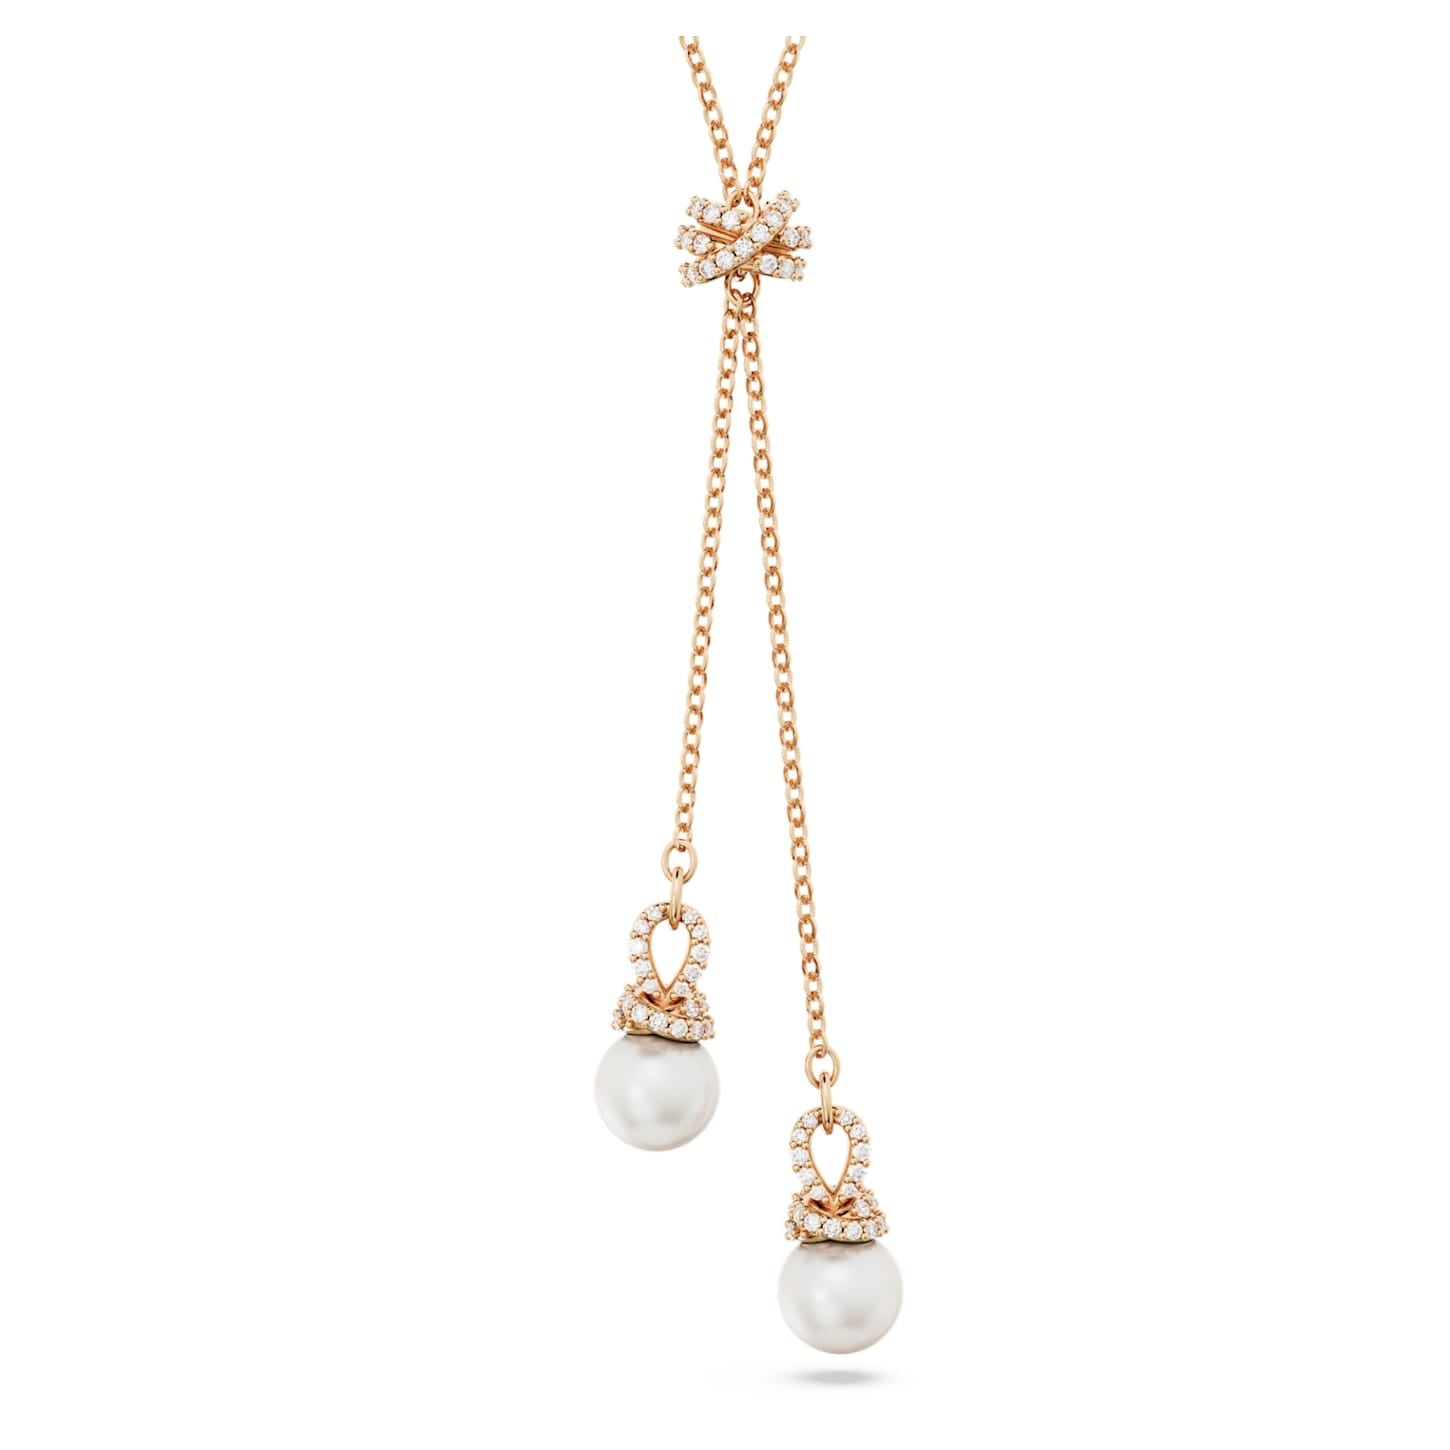 Originally - White Rose Gold - Y Necklace - Swarovski